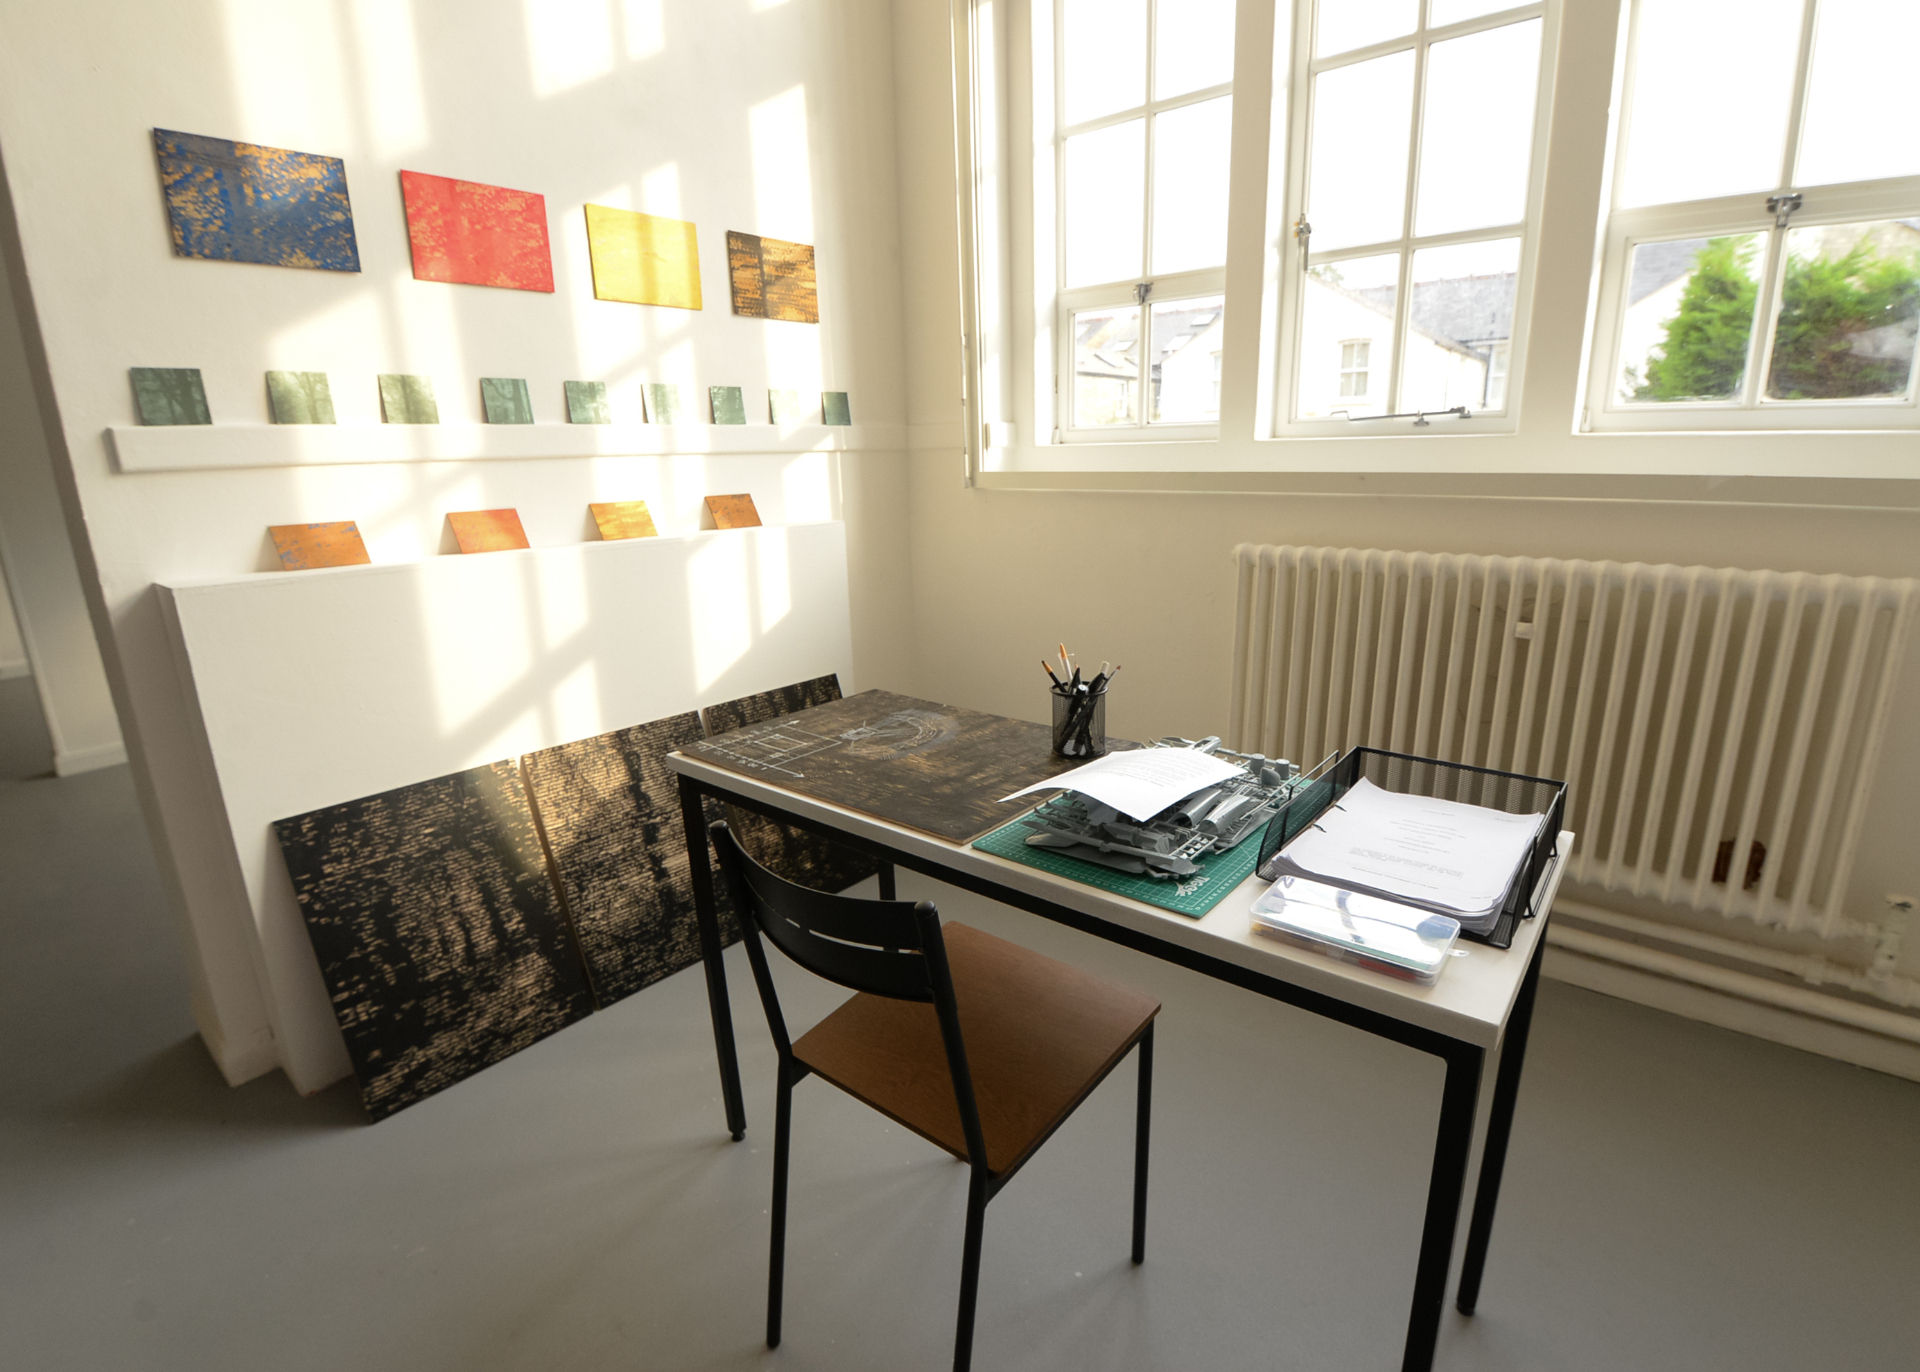 Art exhibit featuring chair, desk and paperwork on display in studio